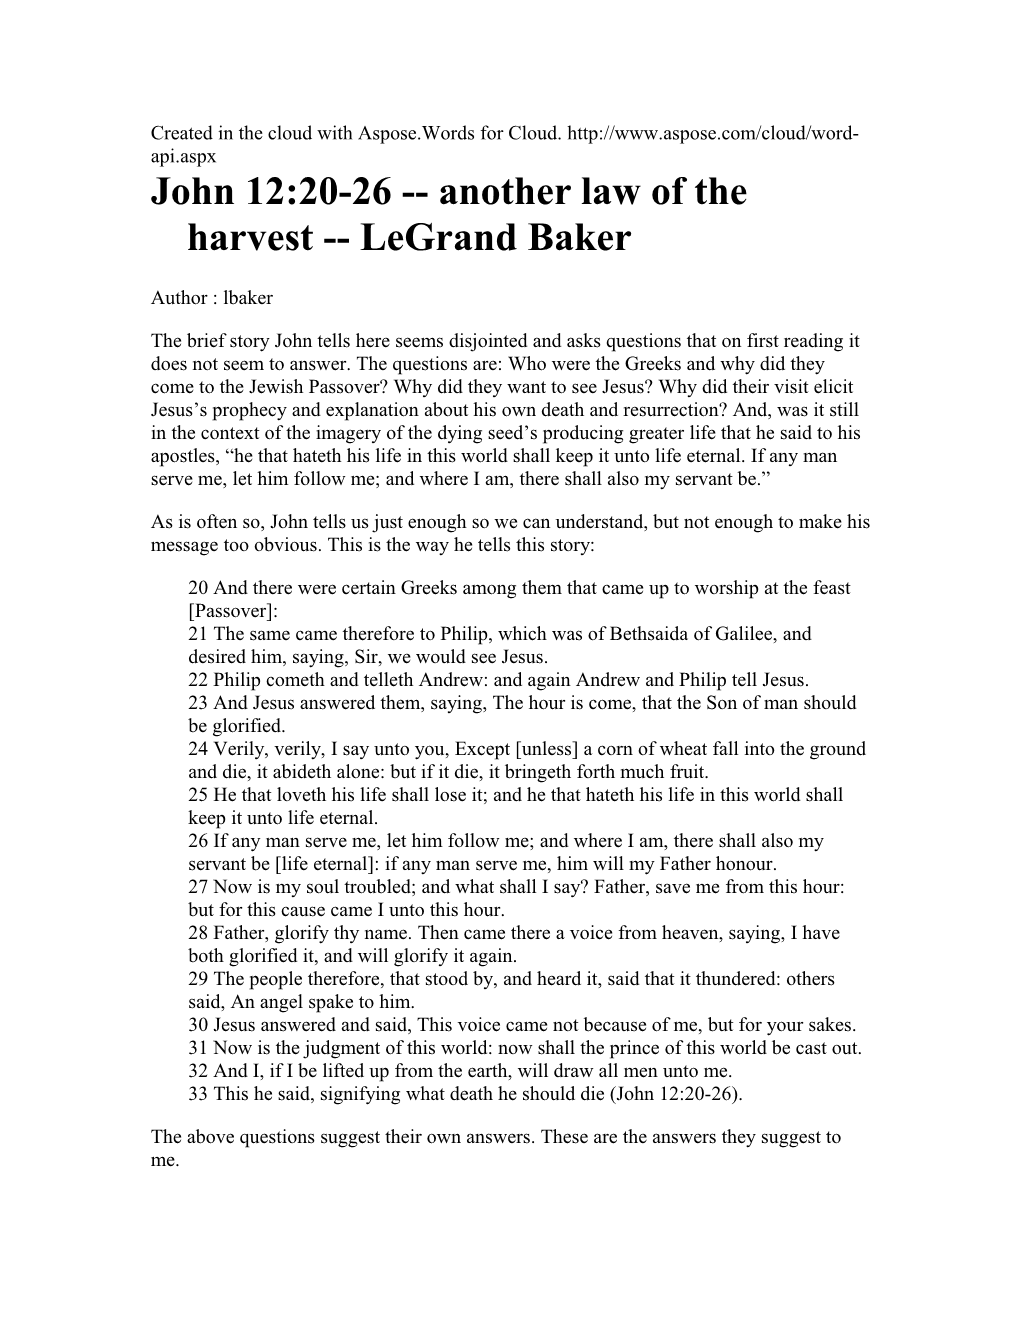 John 12:20-26 Another Law of the Harvest Legrand Baker